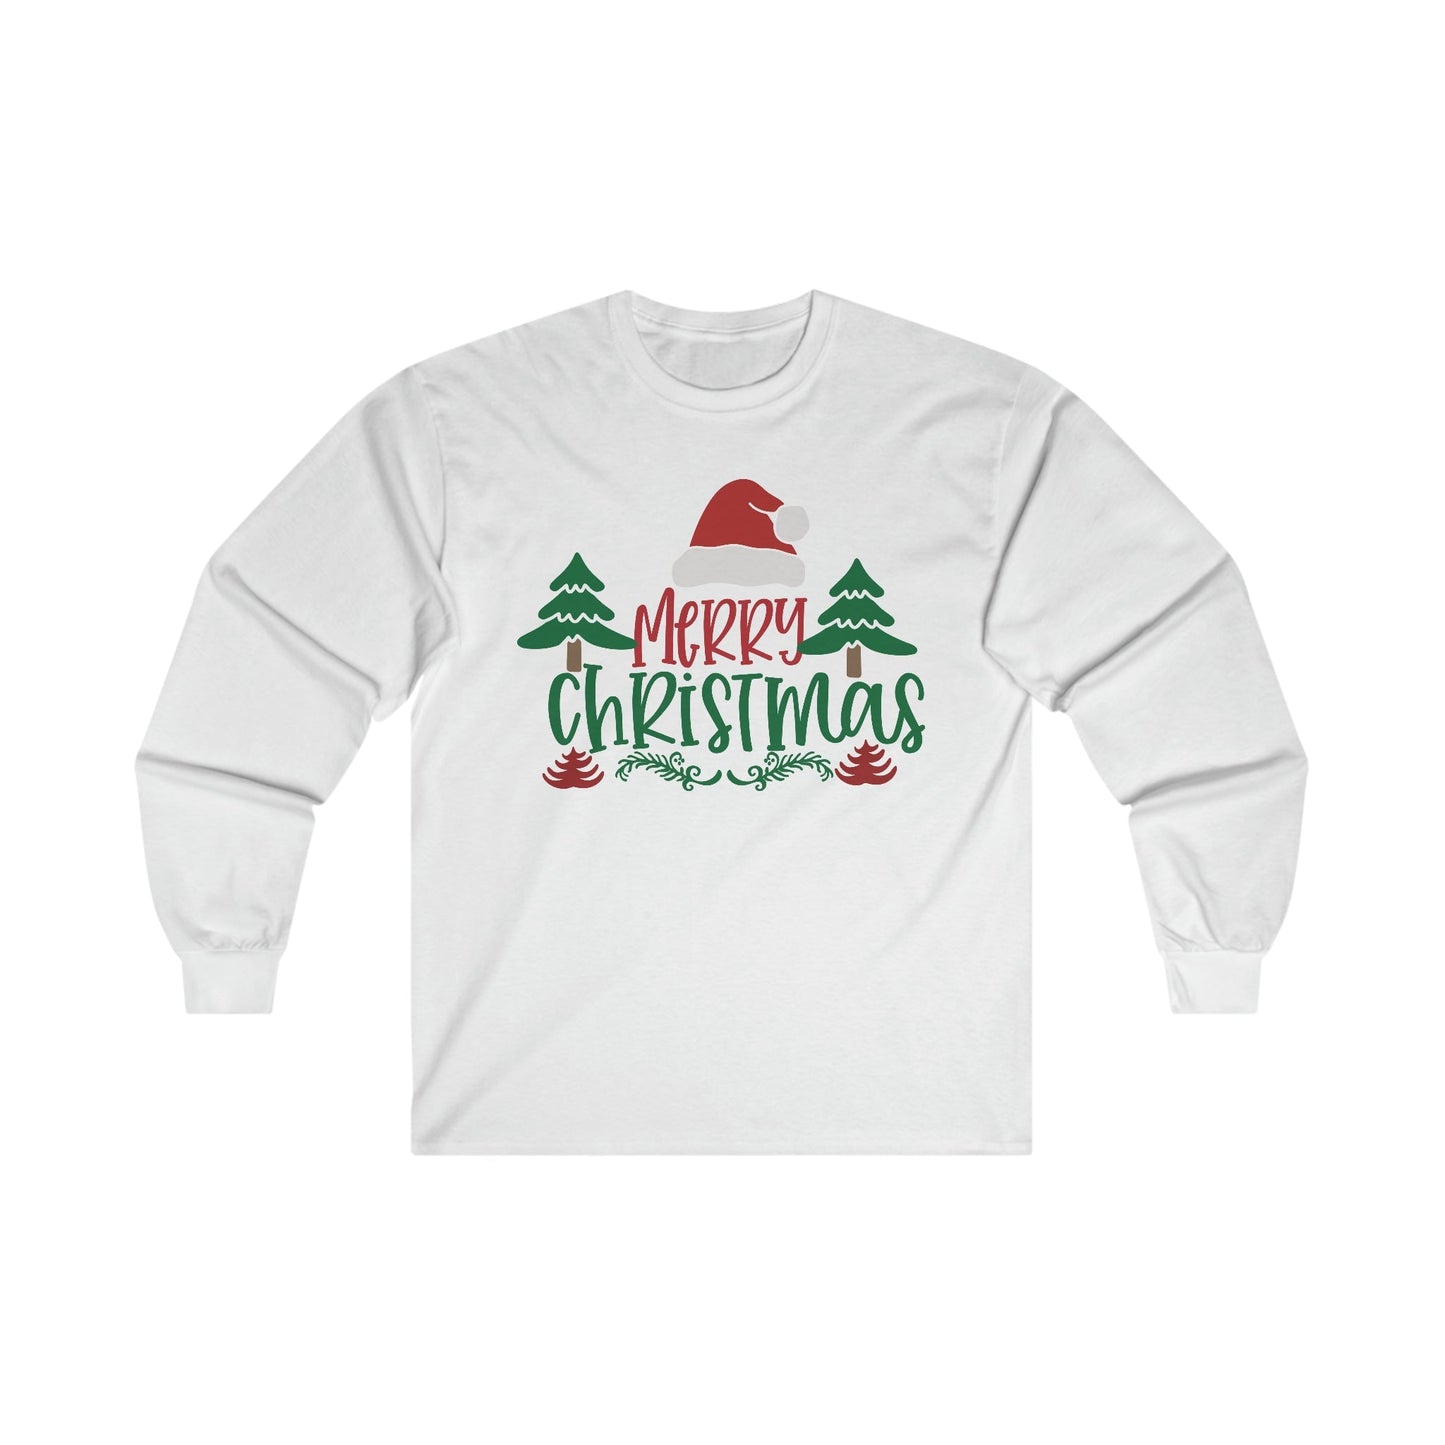 Christmas Long Sleeve T-Shirt - Merry Christmas - Cute Christmas Shirts - Youth and Adult Christmas Long Sleeve TShirts Long Sleeve T-Shirts Graphic Avenue White Adult Small 